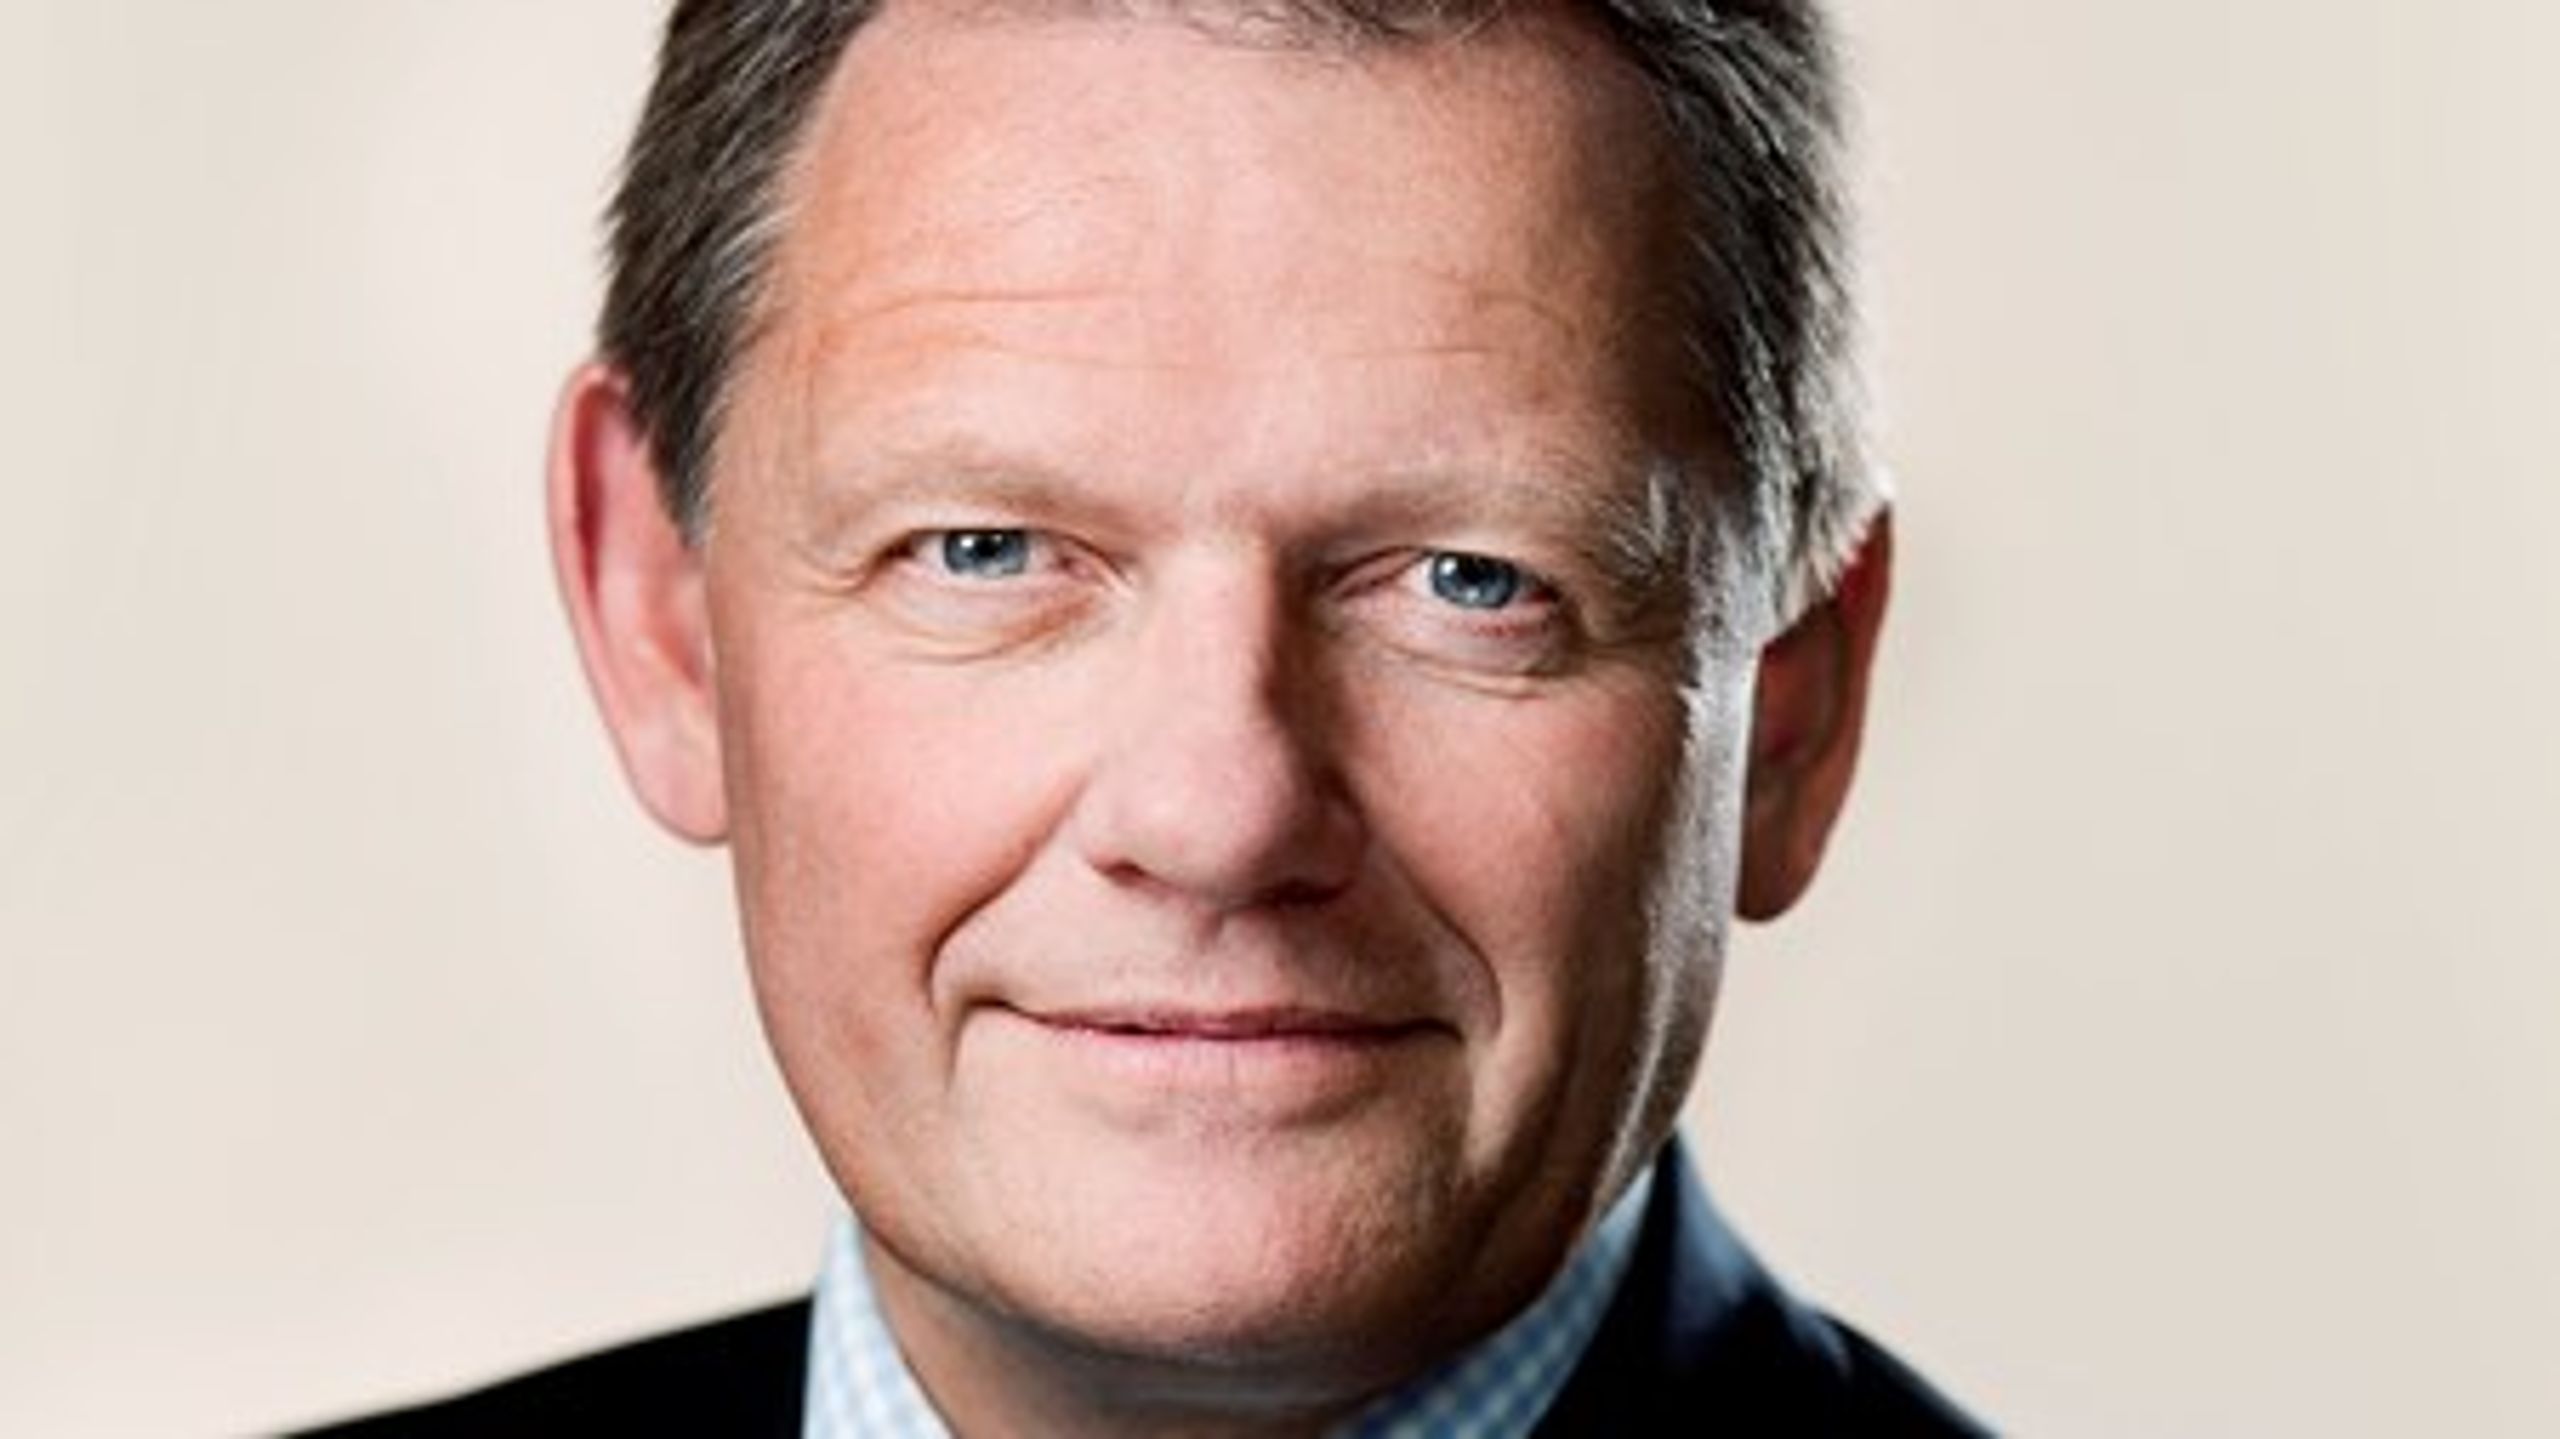 Transportminister Magnus Heunicke (S) mangler en samlet plan for nye tiltag på transportområdet, skriver Lars Barfoed (K).